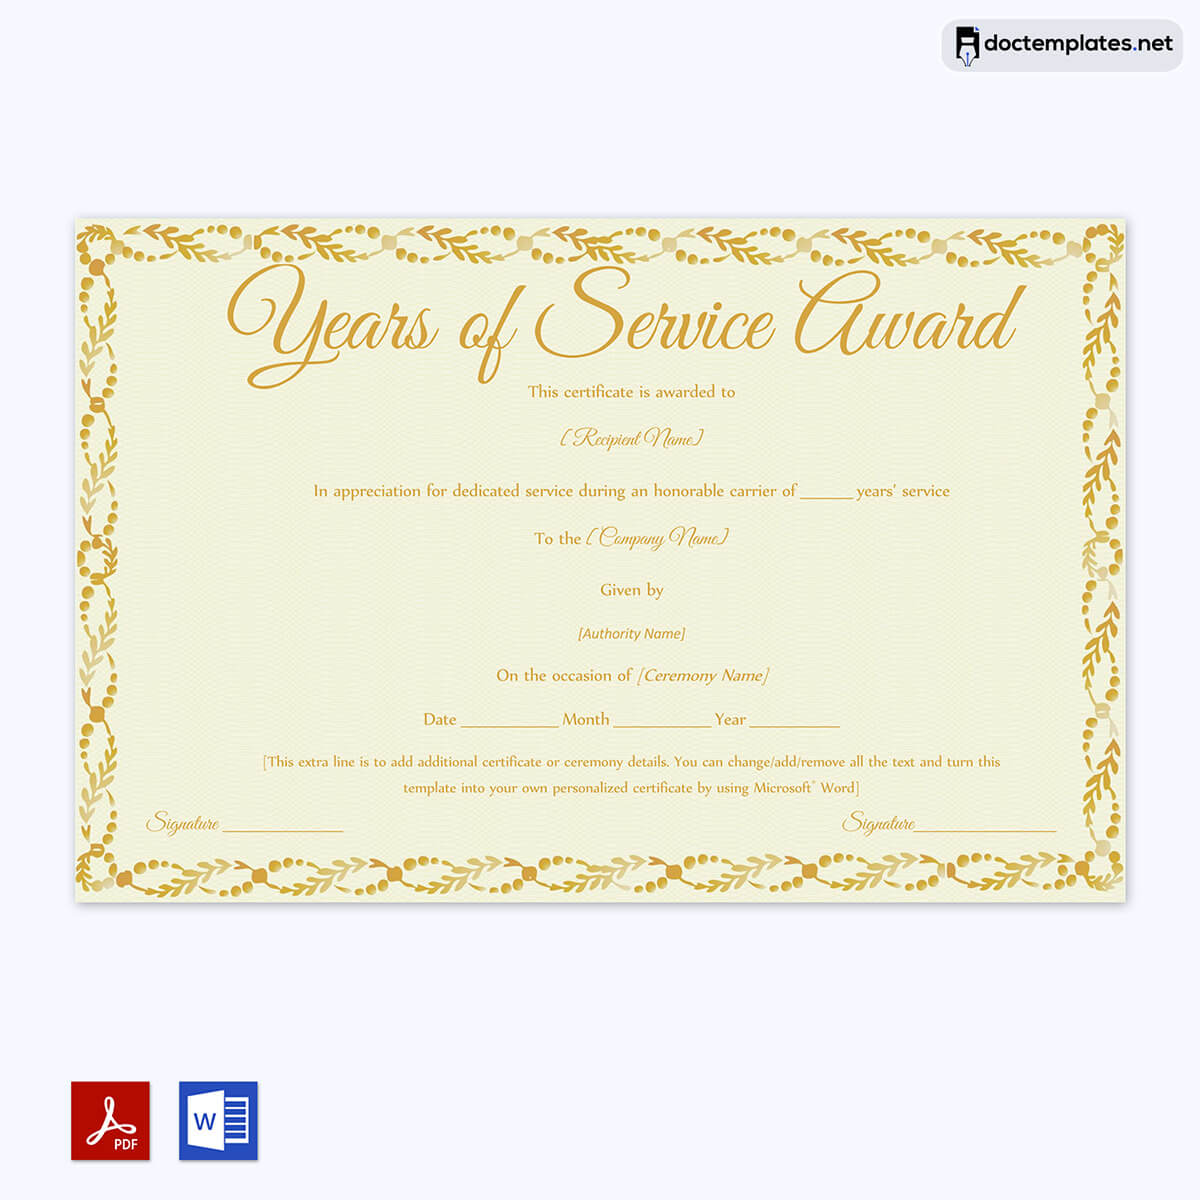 years of service award certificate wording